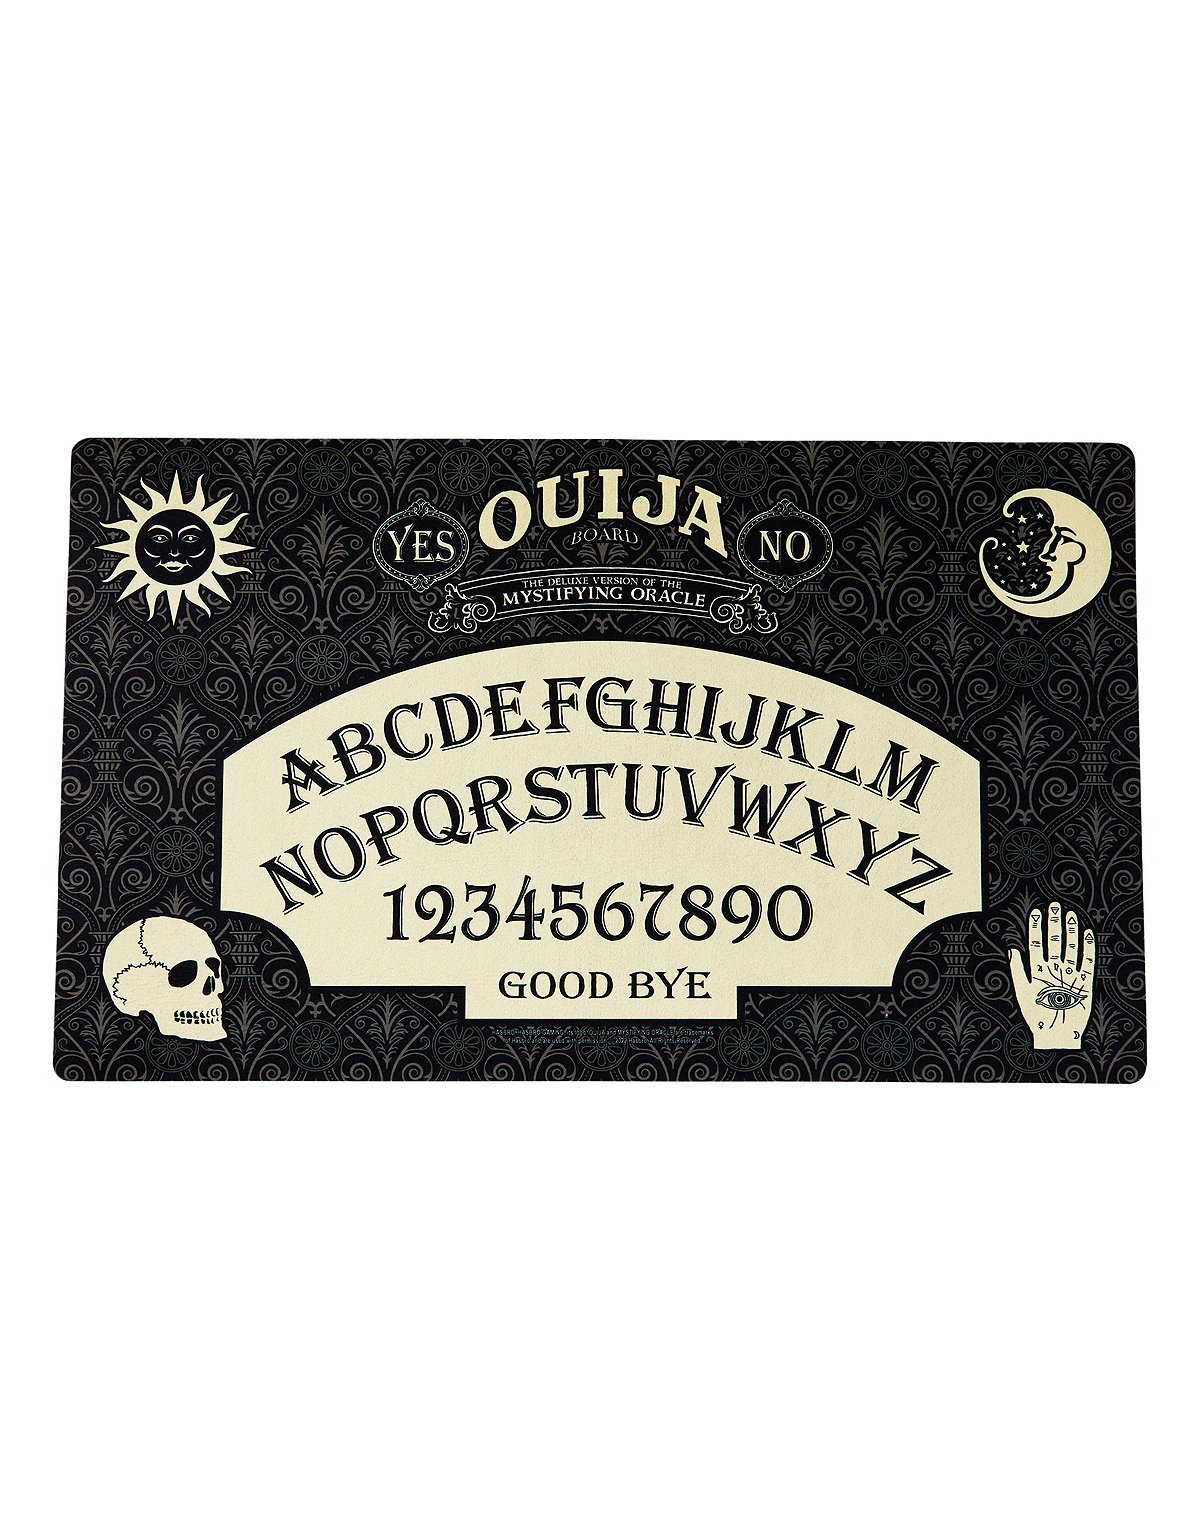 Ouija board doormat